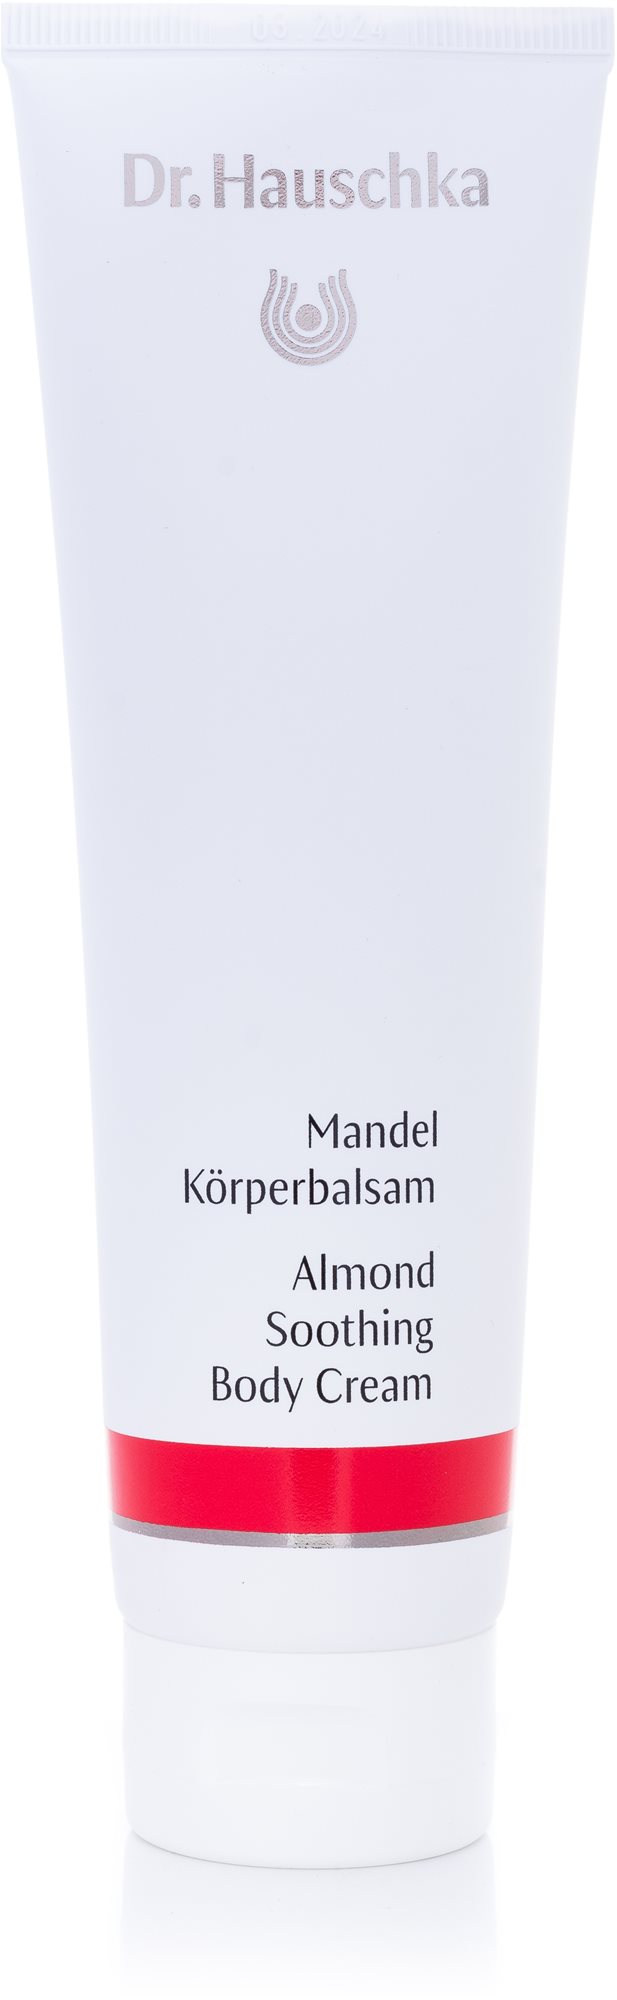 DR. HAUSCHKA Almond Soothing Body Cream 145 ml